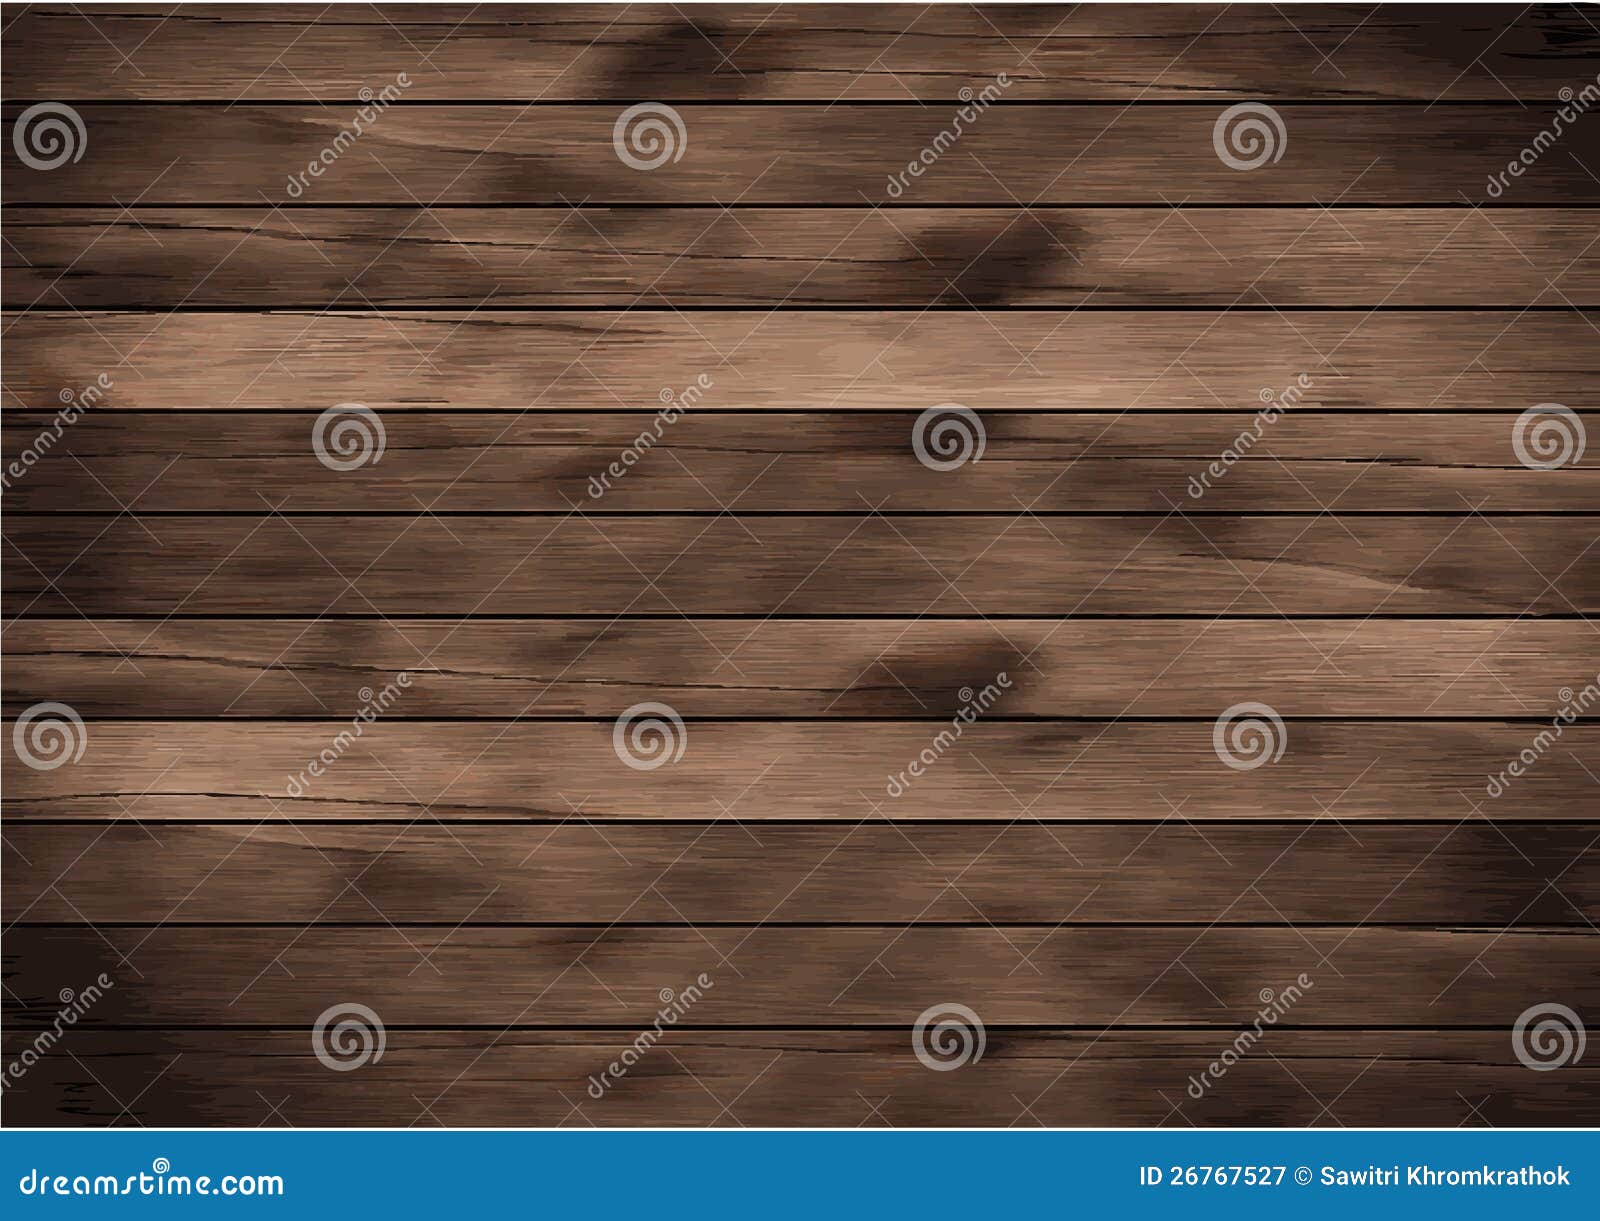  wood plank background